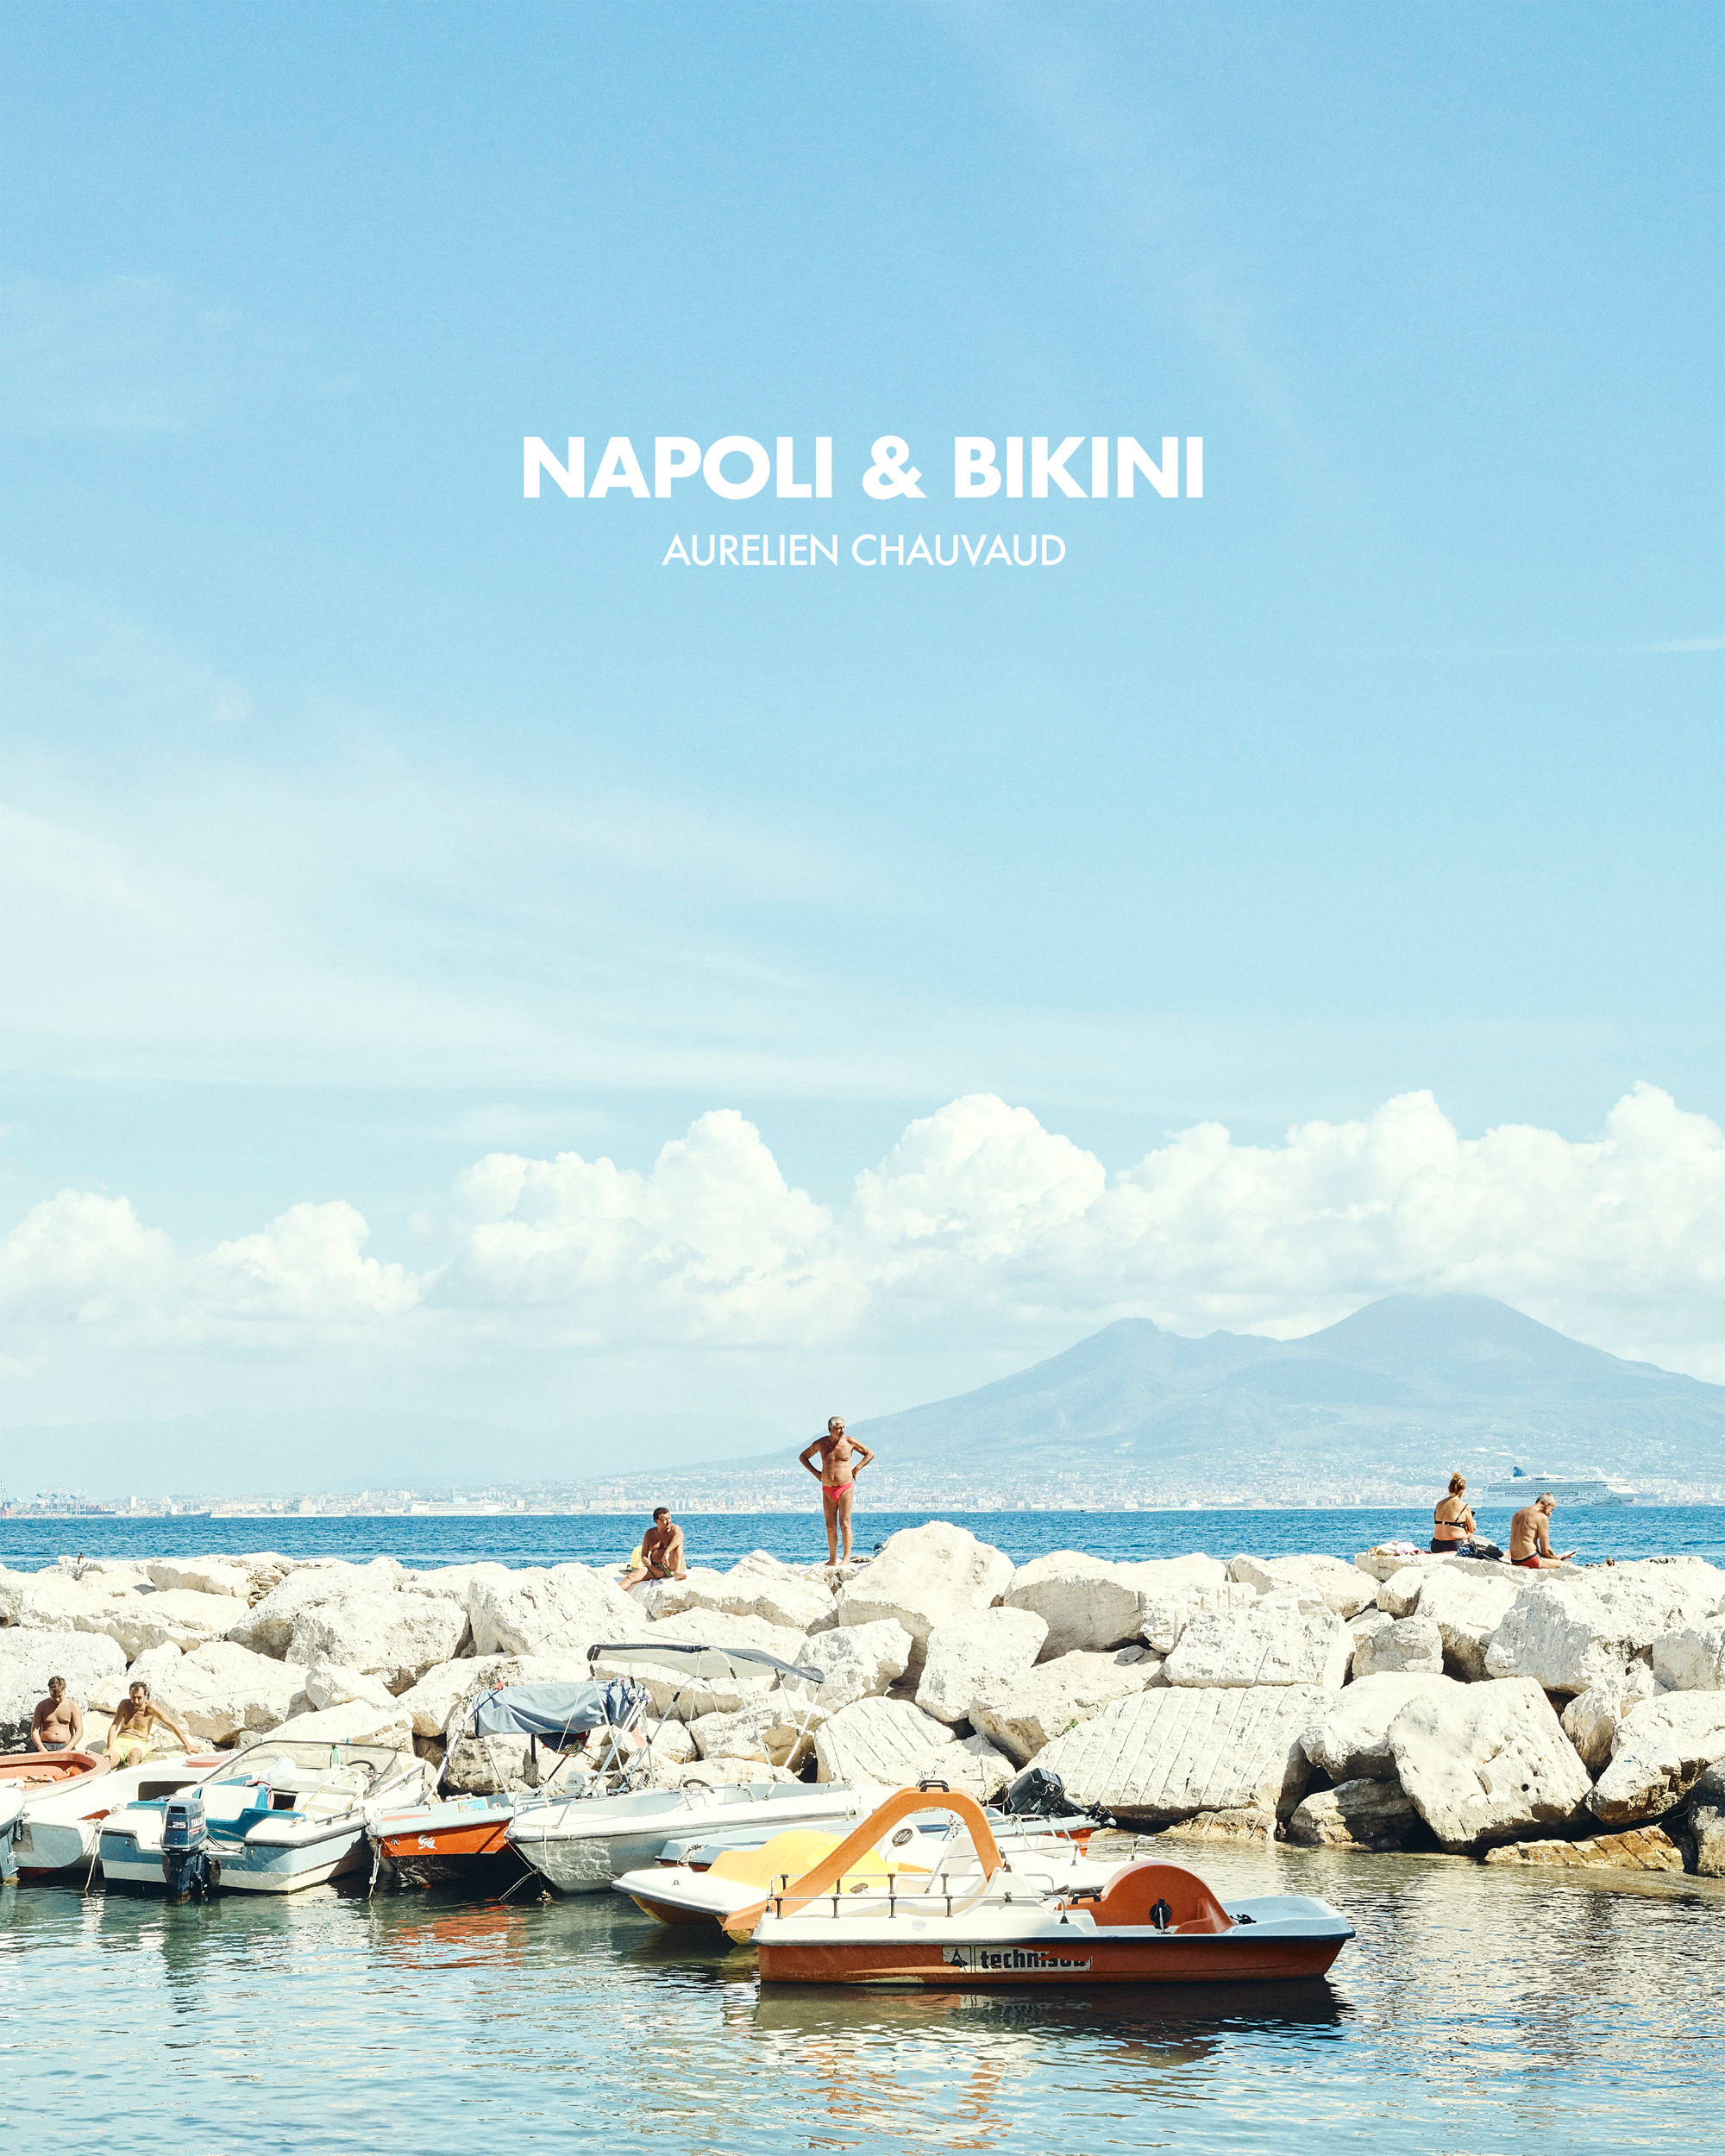 April 2022 – Release of a self published magazine on Napoli called ‘Napoli & Bikini’